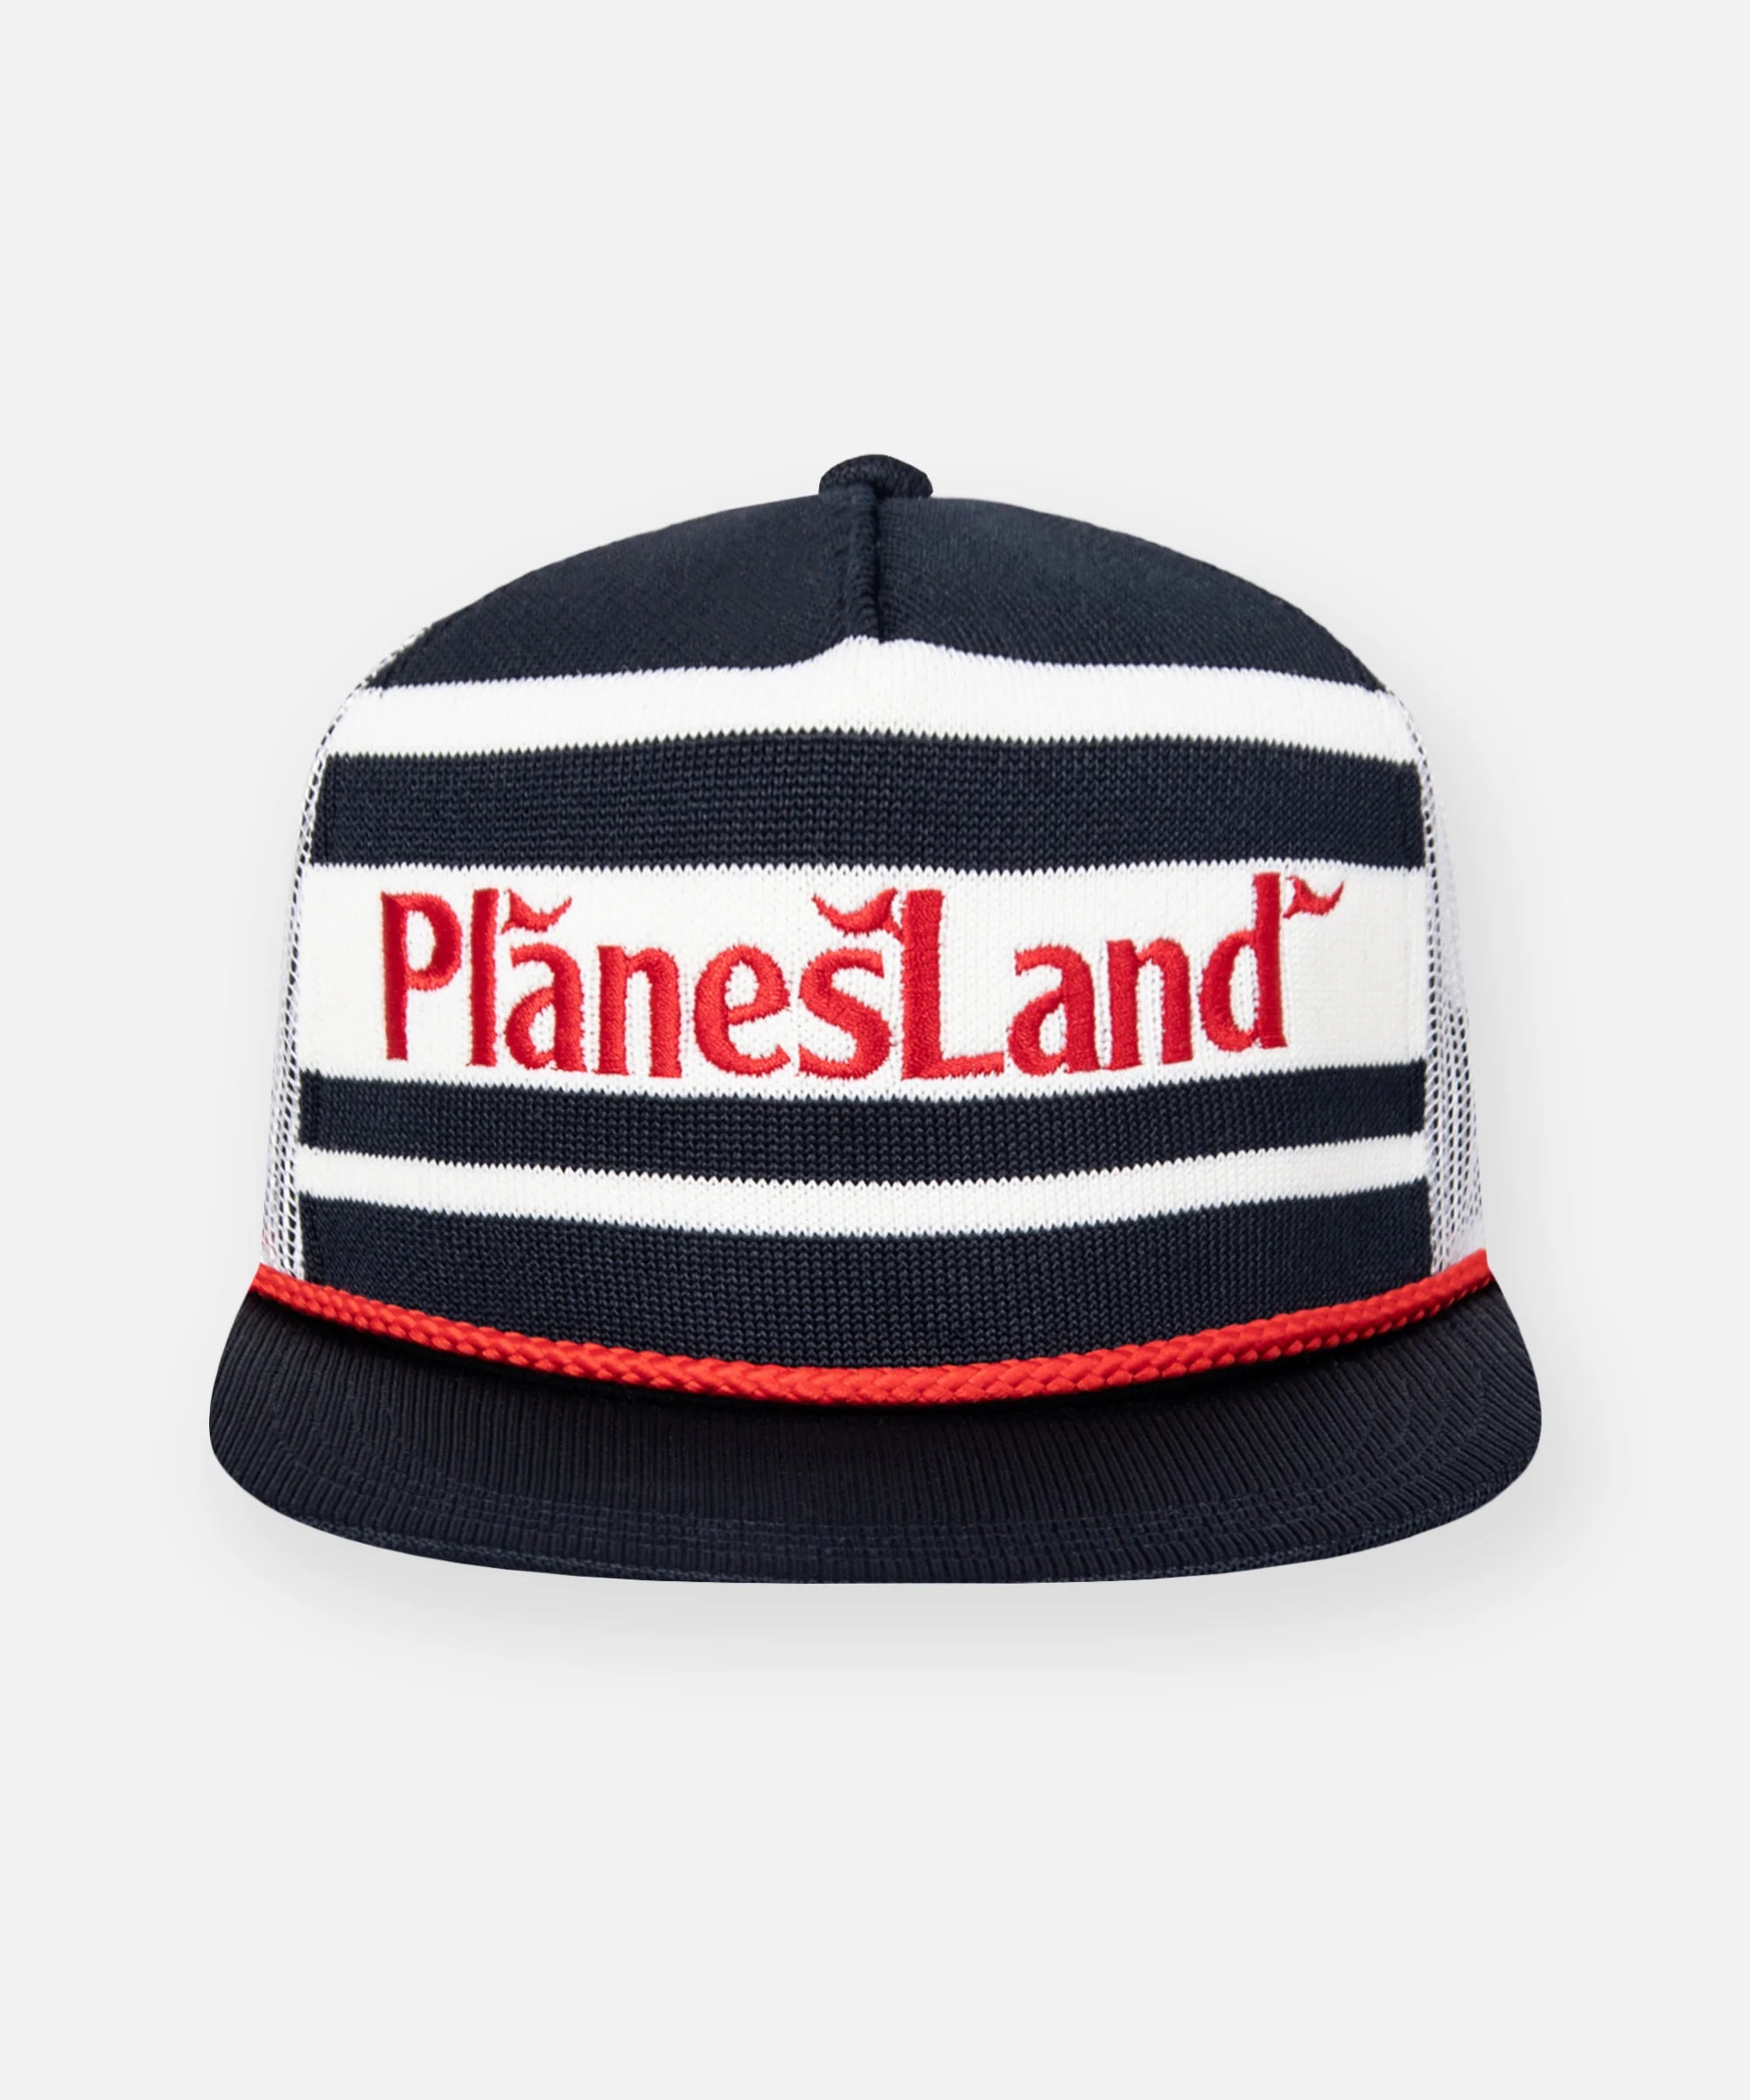 Paper Planes Trucker Hat - Planes Land Knit Stripes